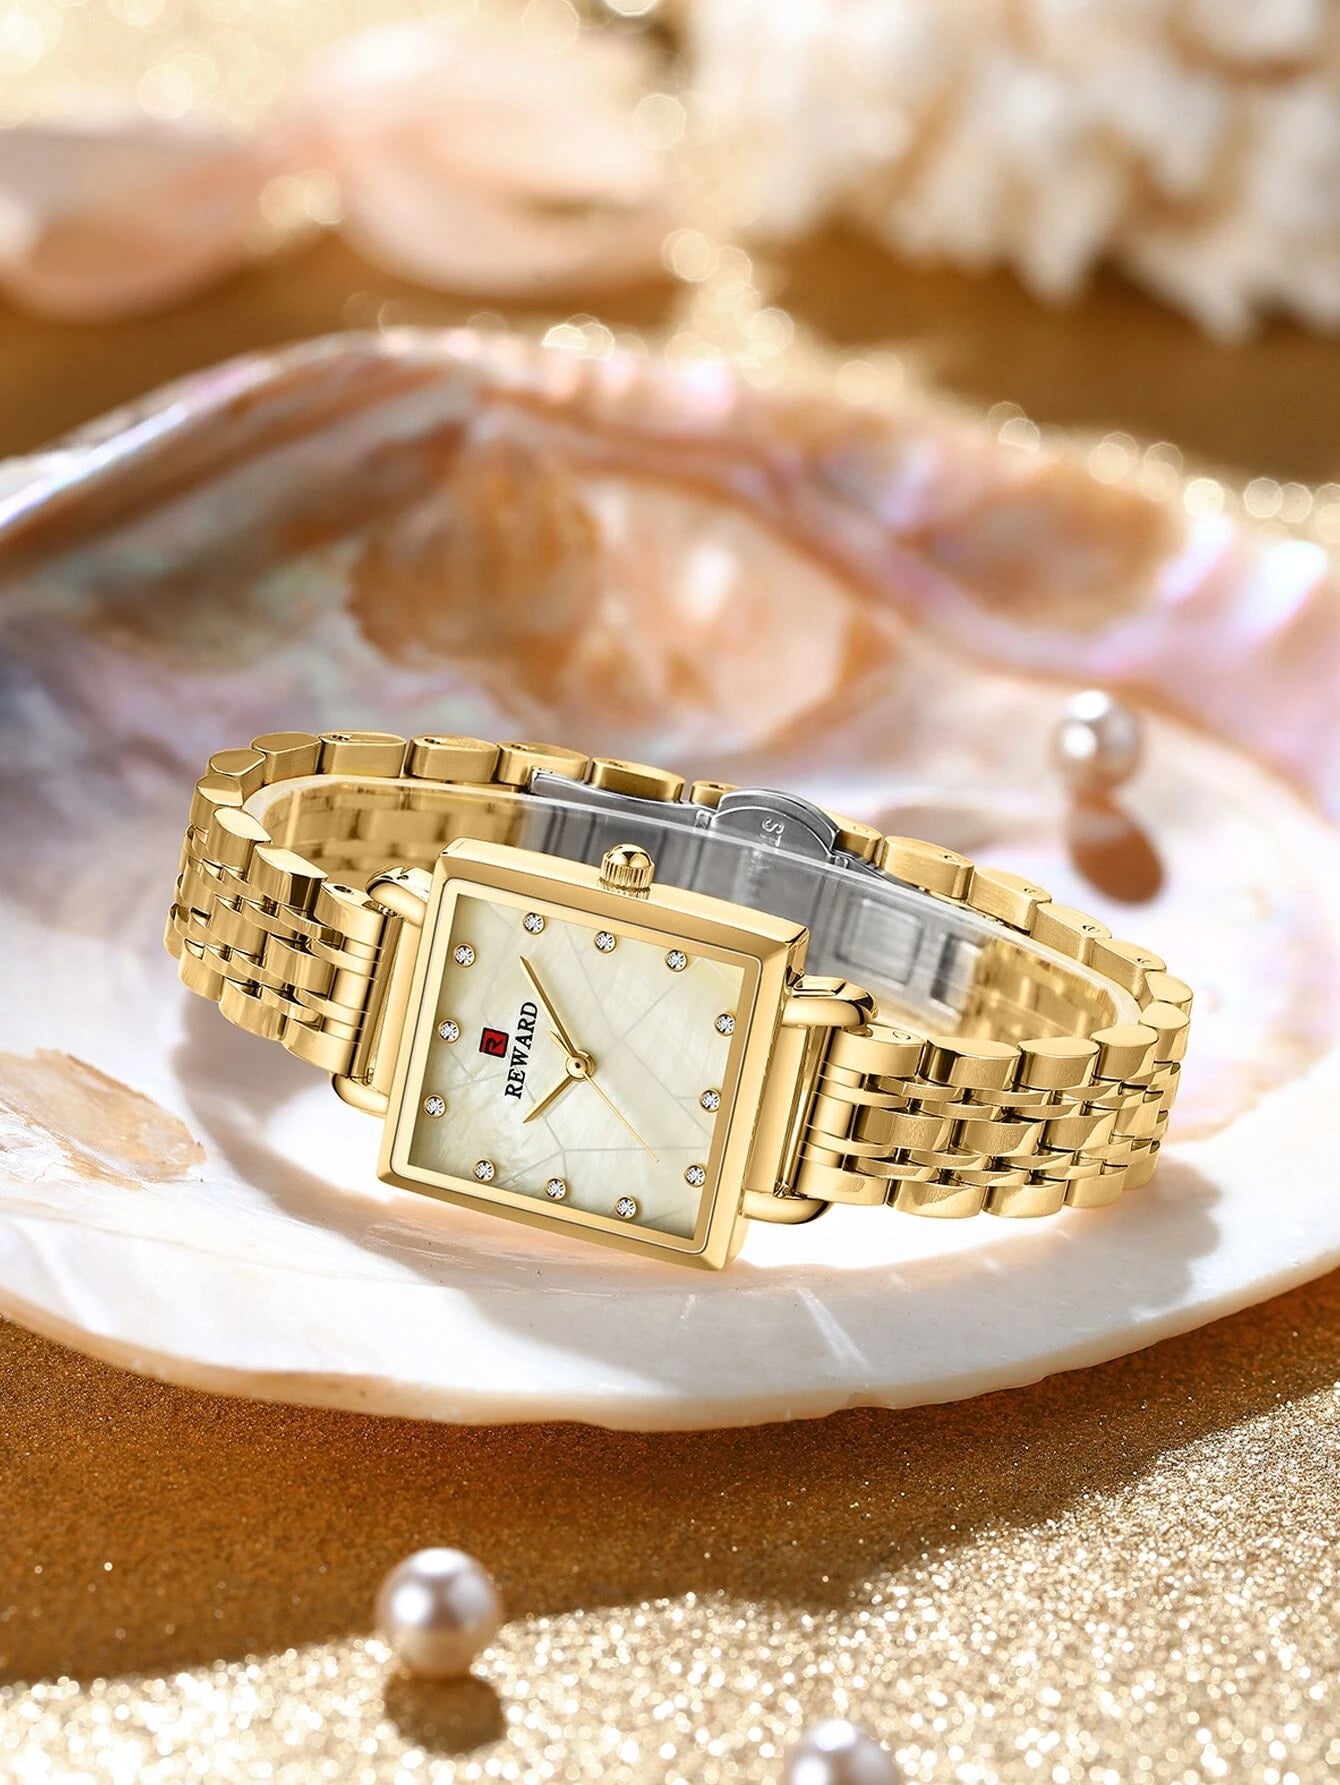 REWARD New Design Quartz Watch for Women Fashion Casual High Quality Wrist Watches Stainless Steel Wristwatch Female